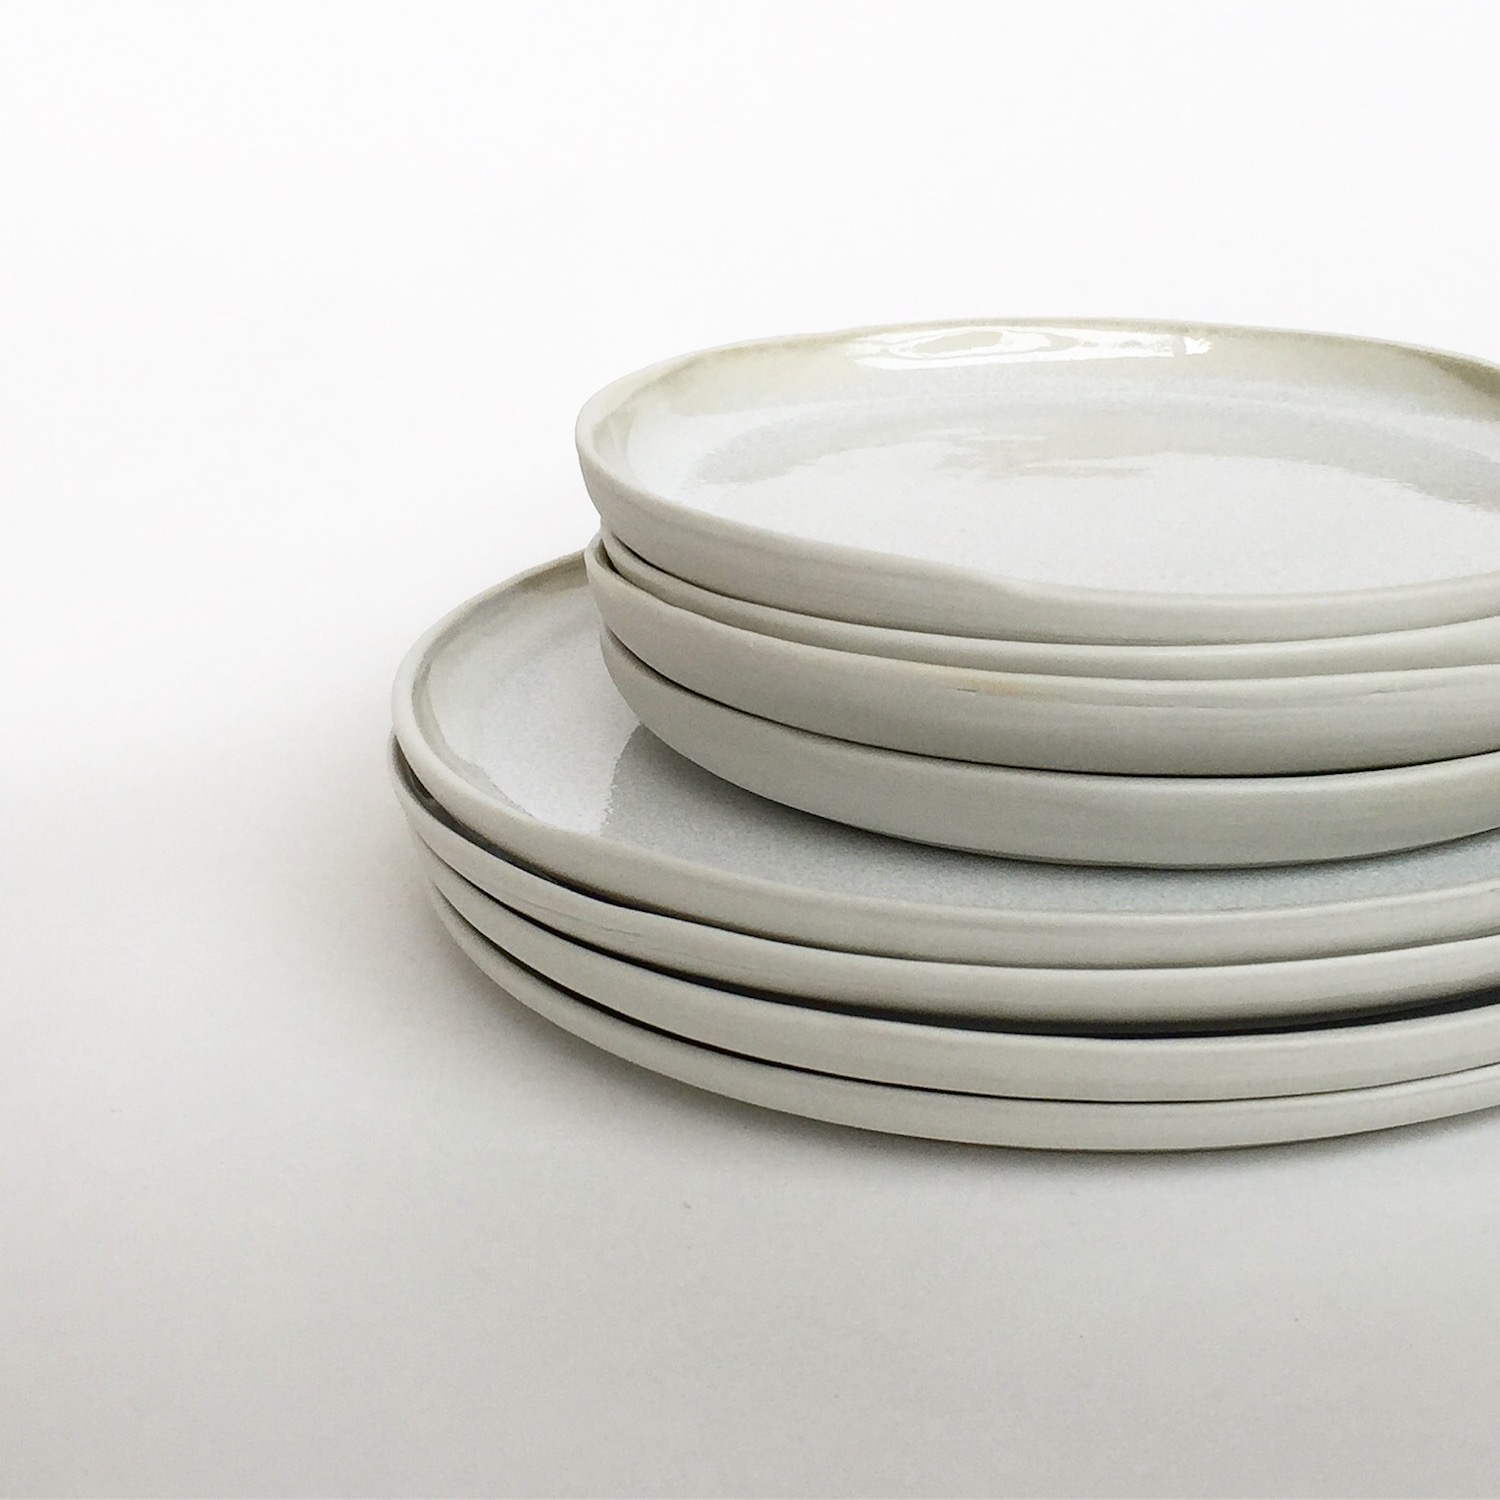 Ceramic Plates by Annemieke Boots - Enter the Loft